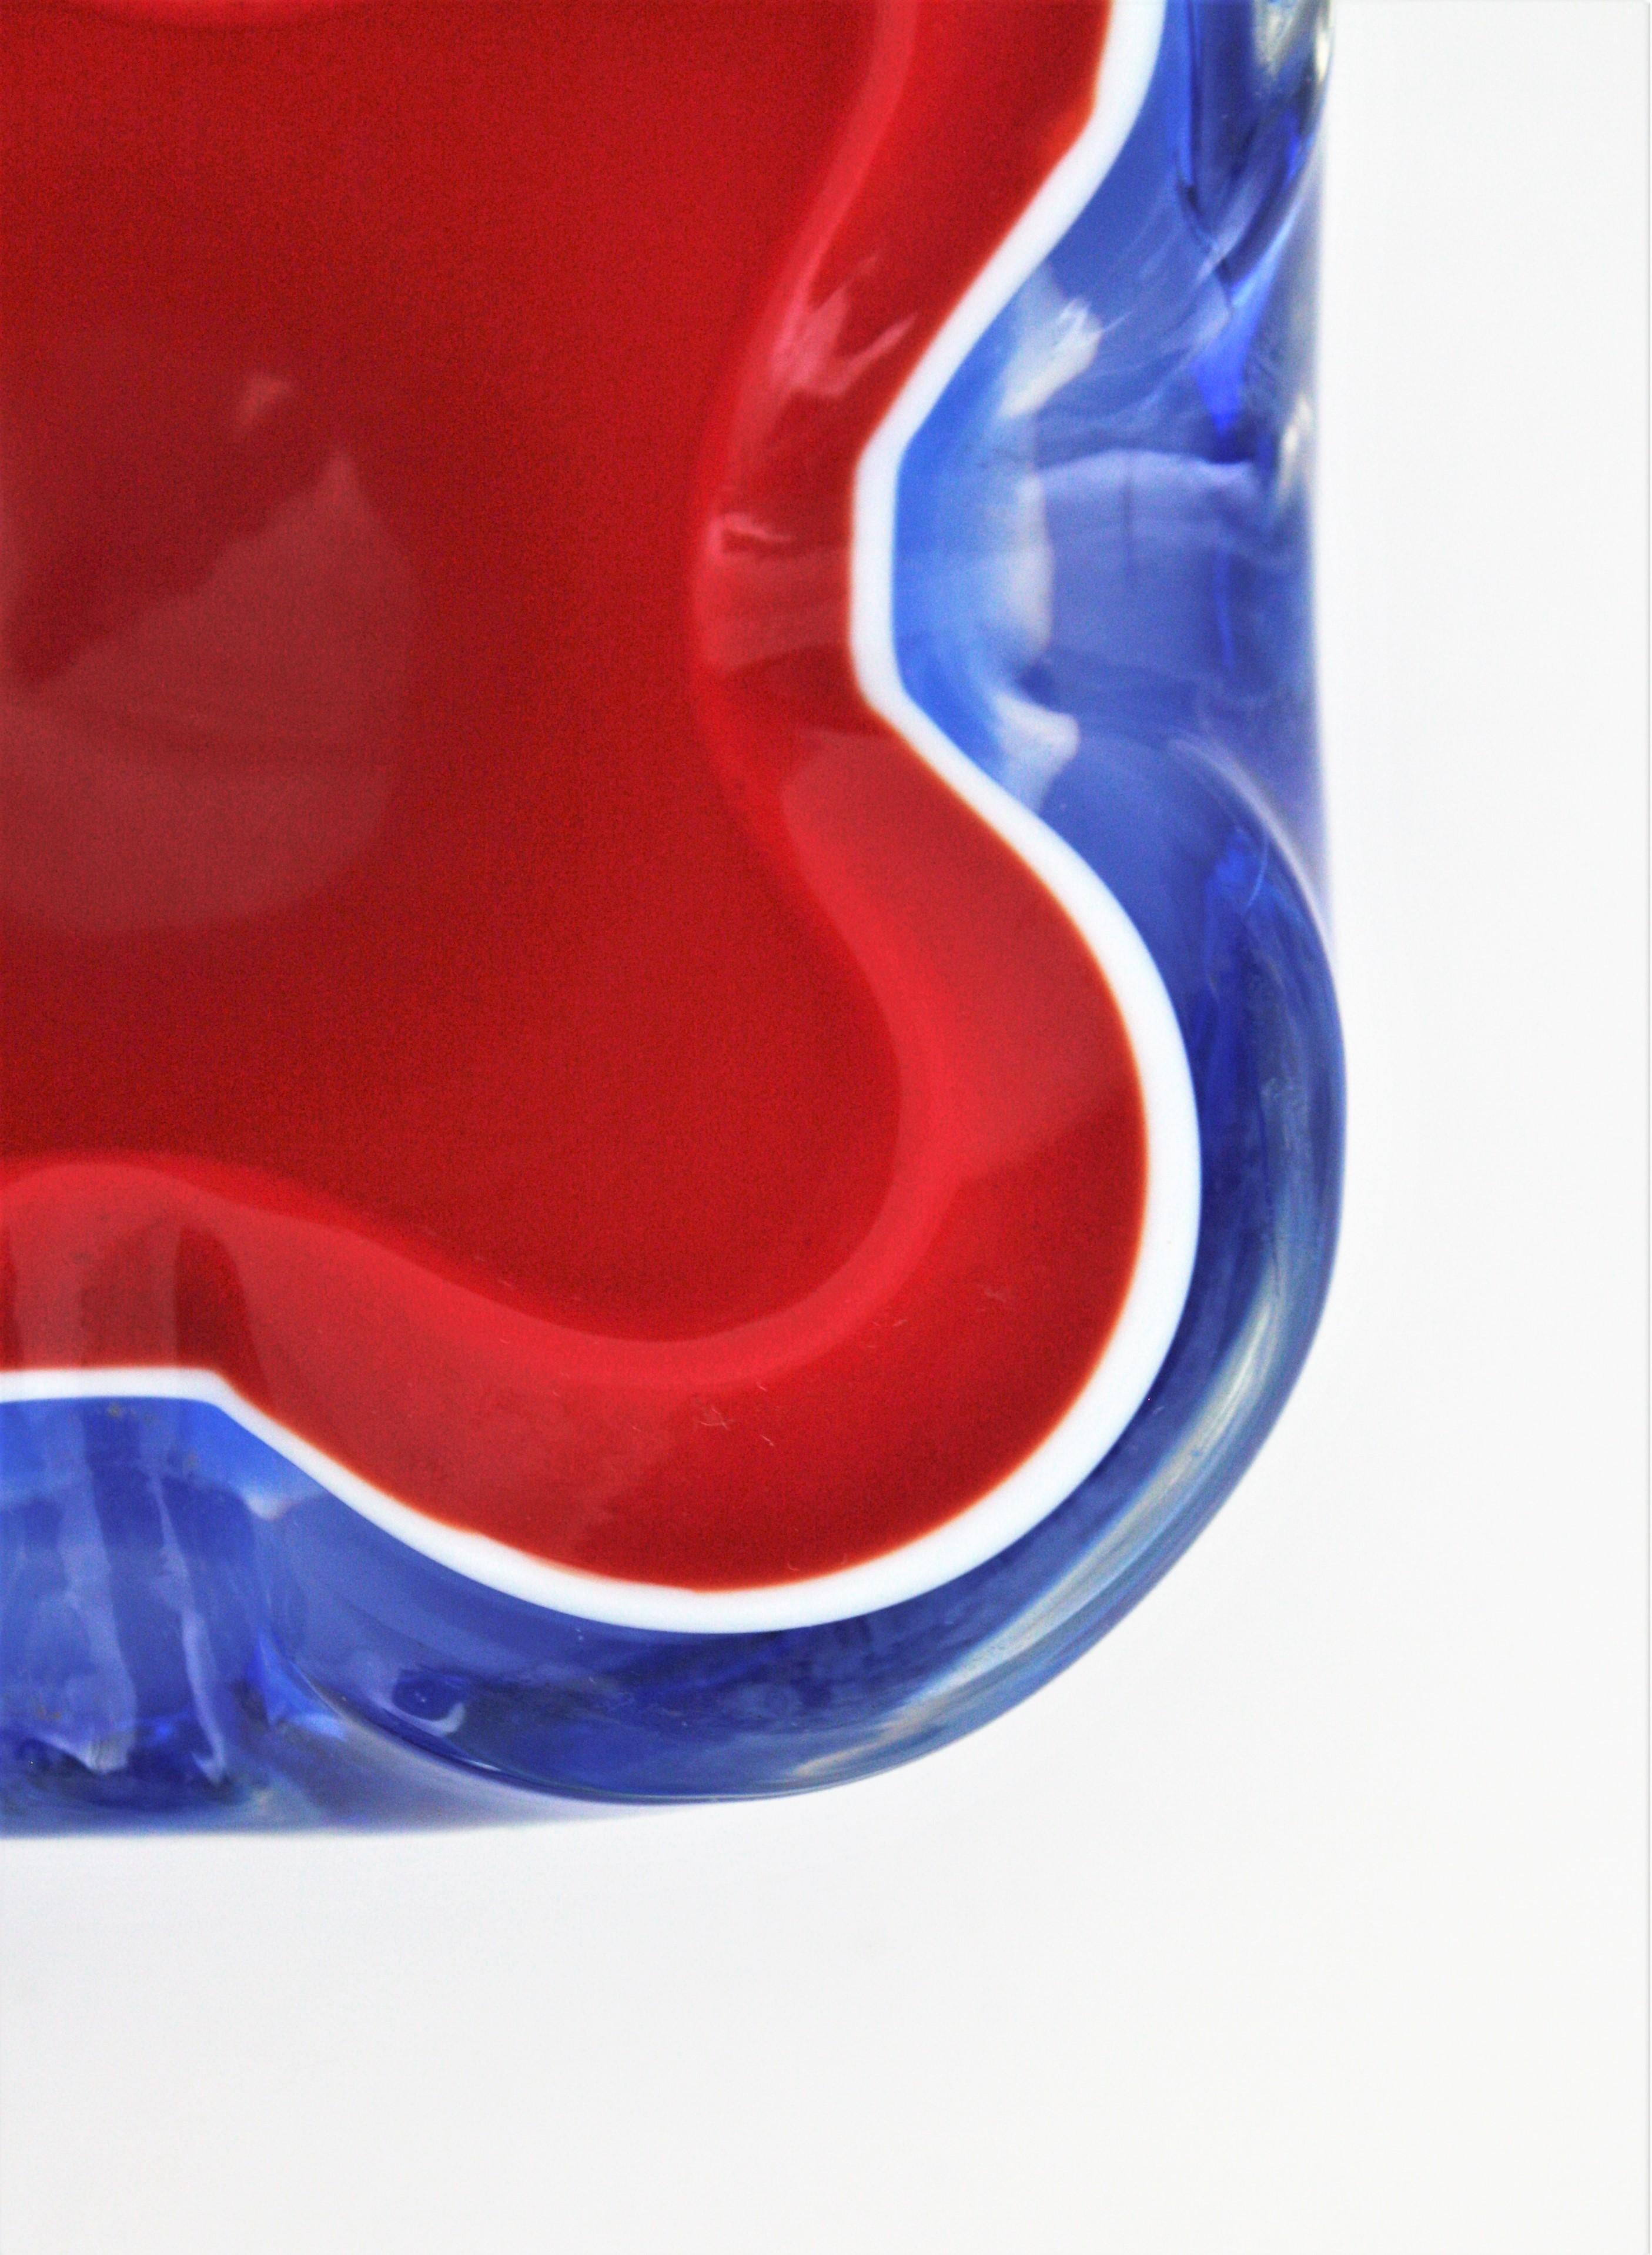 Seguso Murano Sommerso Blue Red Art Glass Bowl 4